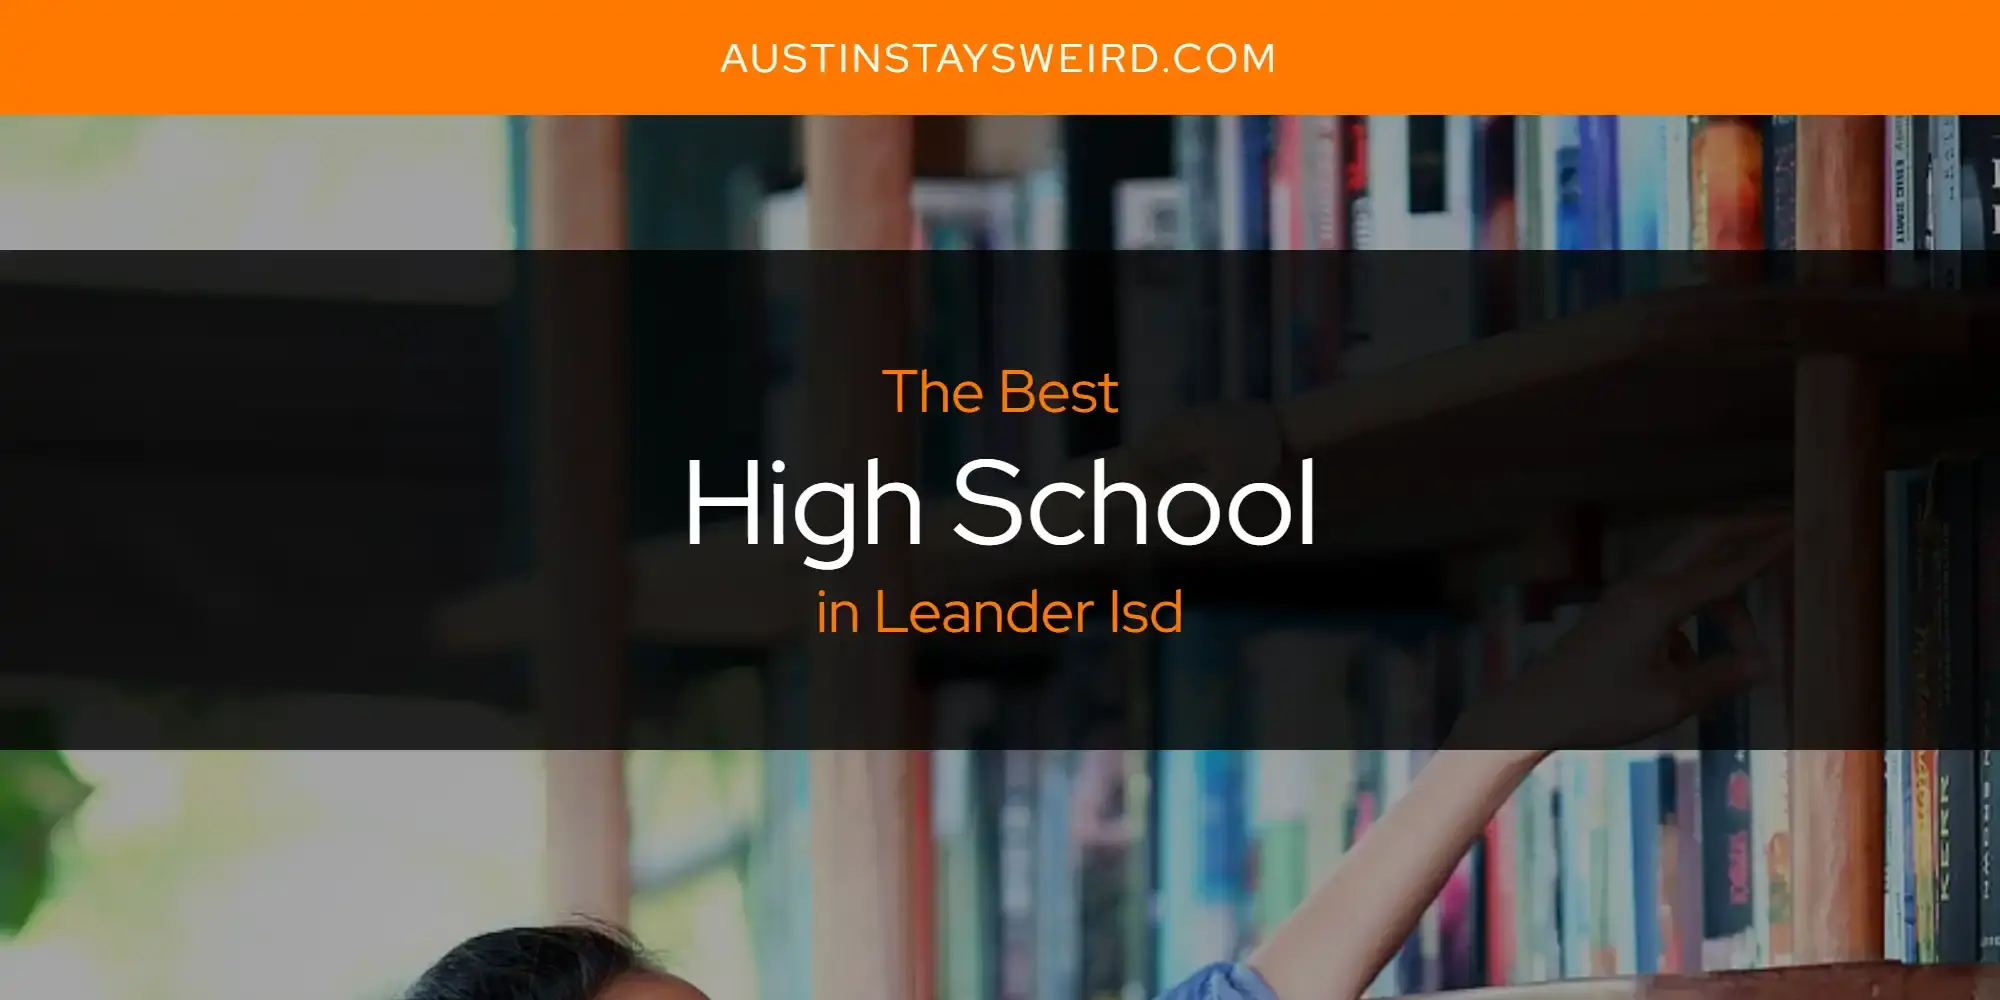 Best High School in Leander ISD? Here's the Top 8